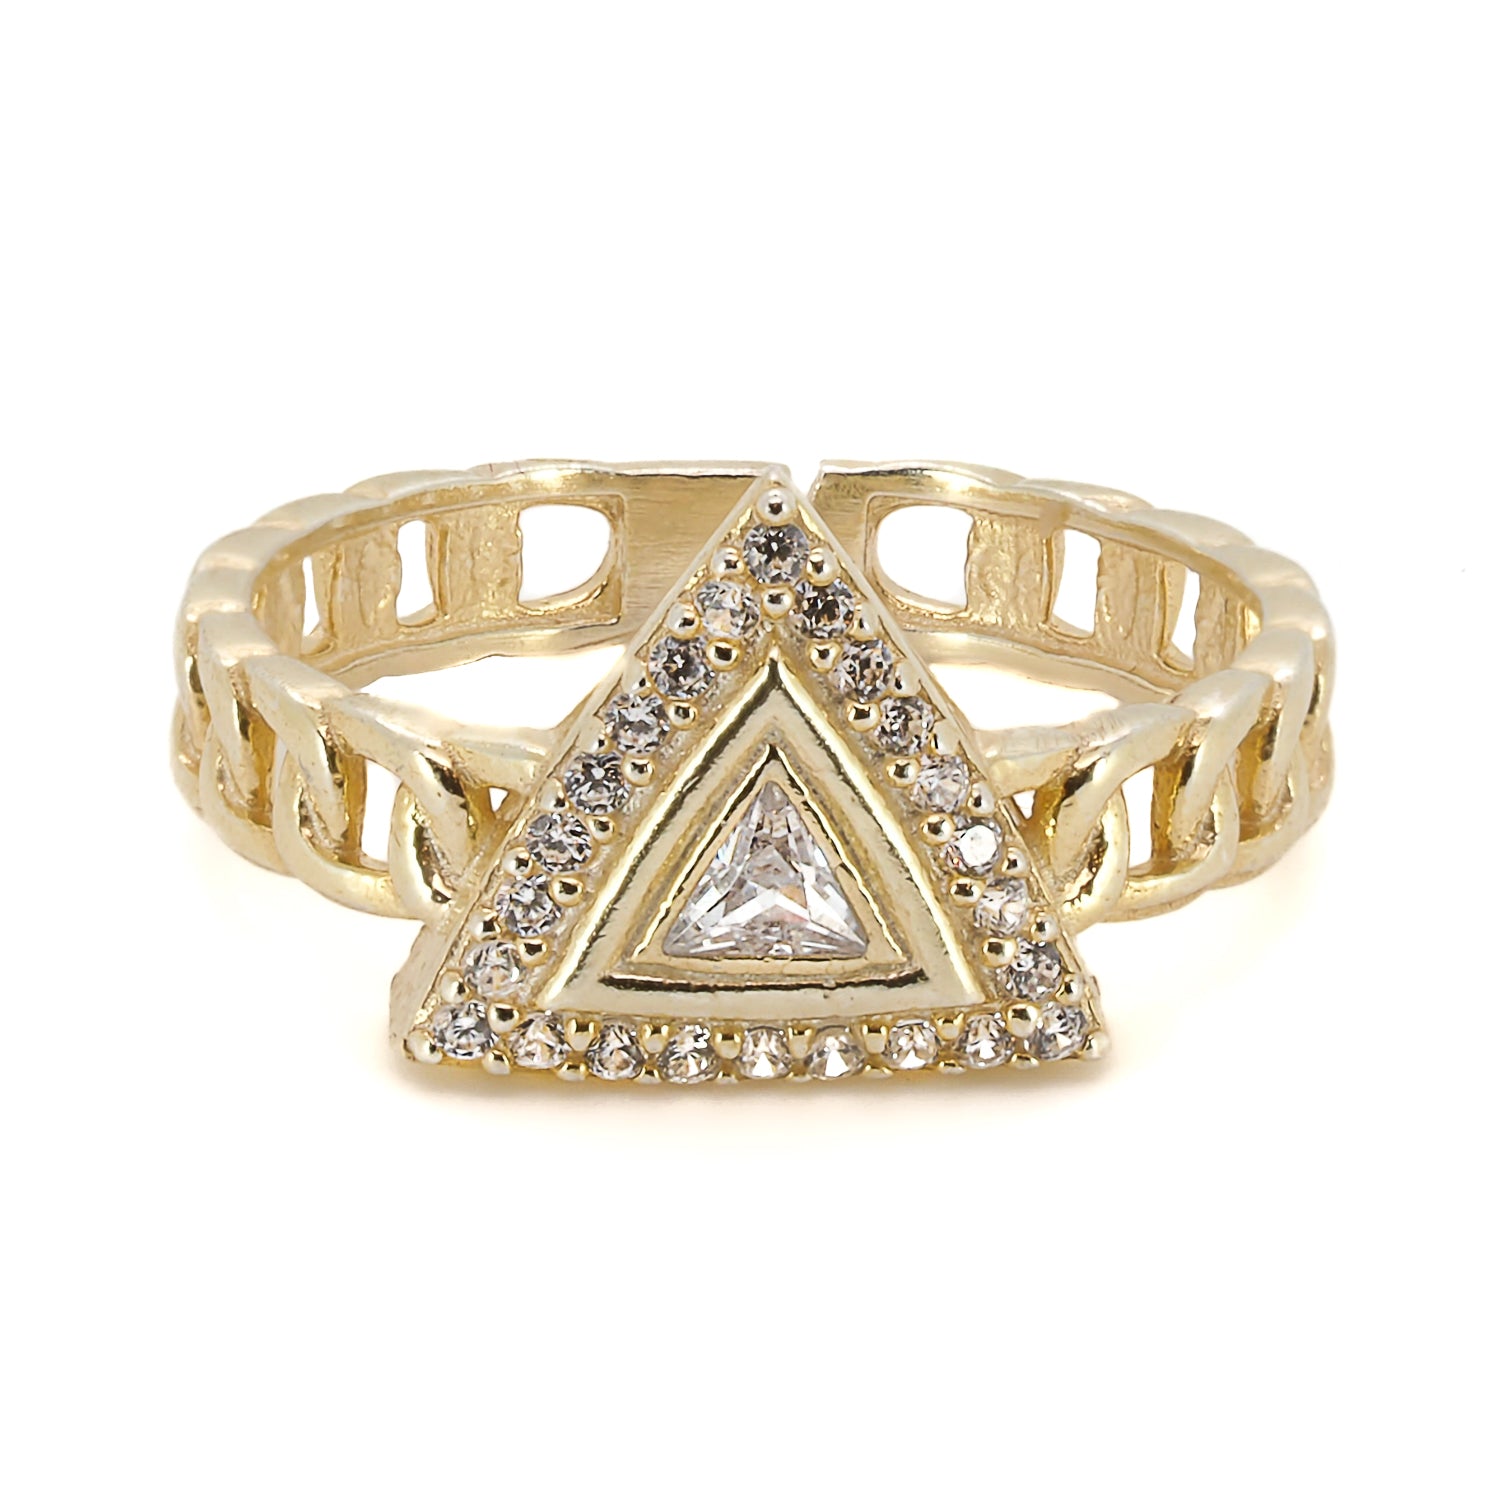 Gold Vermeil Diamond Ring on display, radiating elegance.